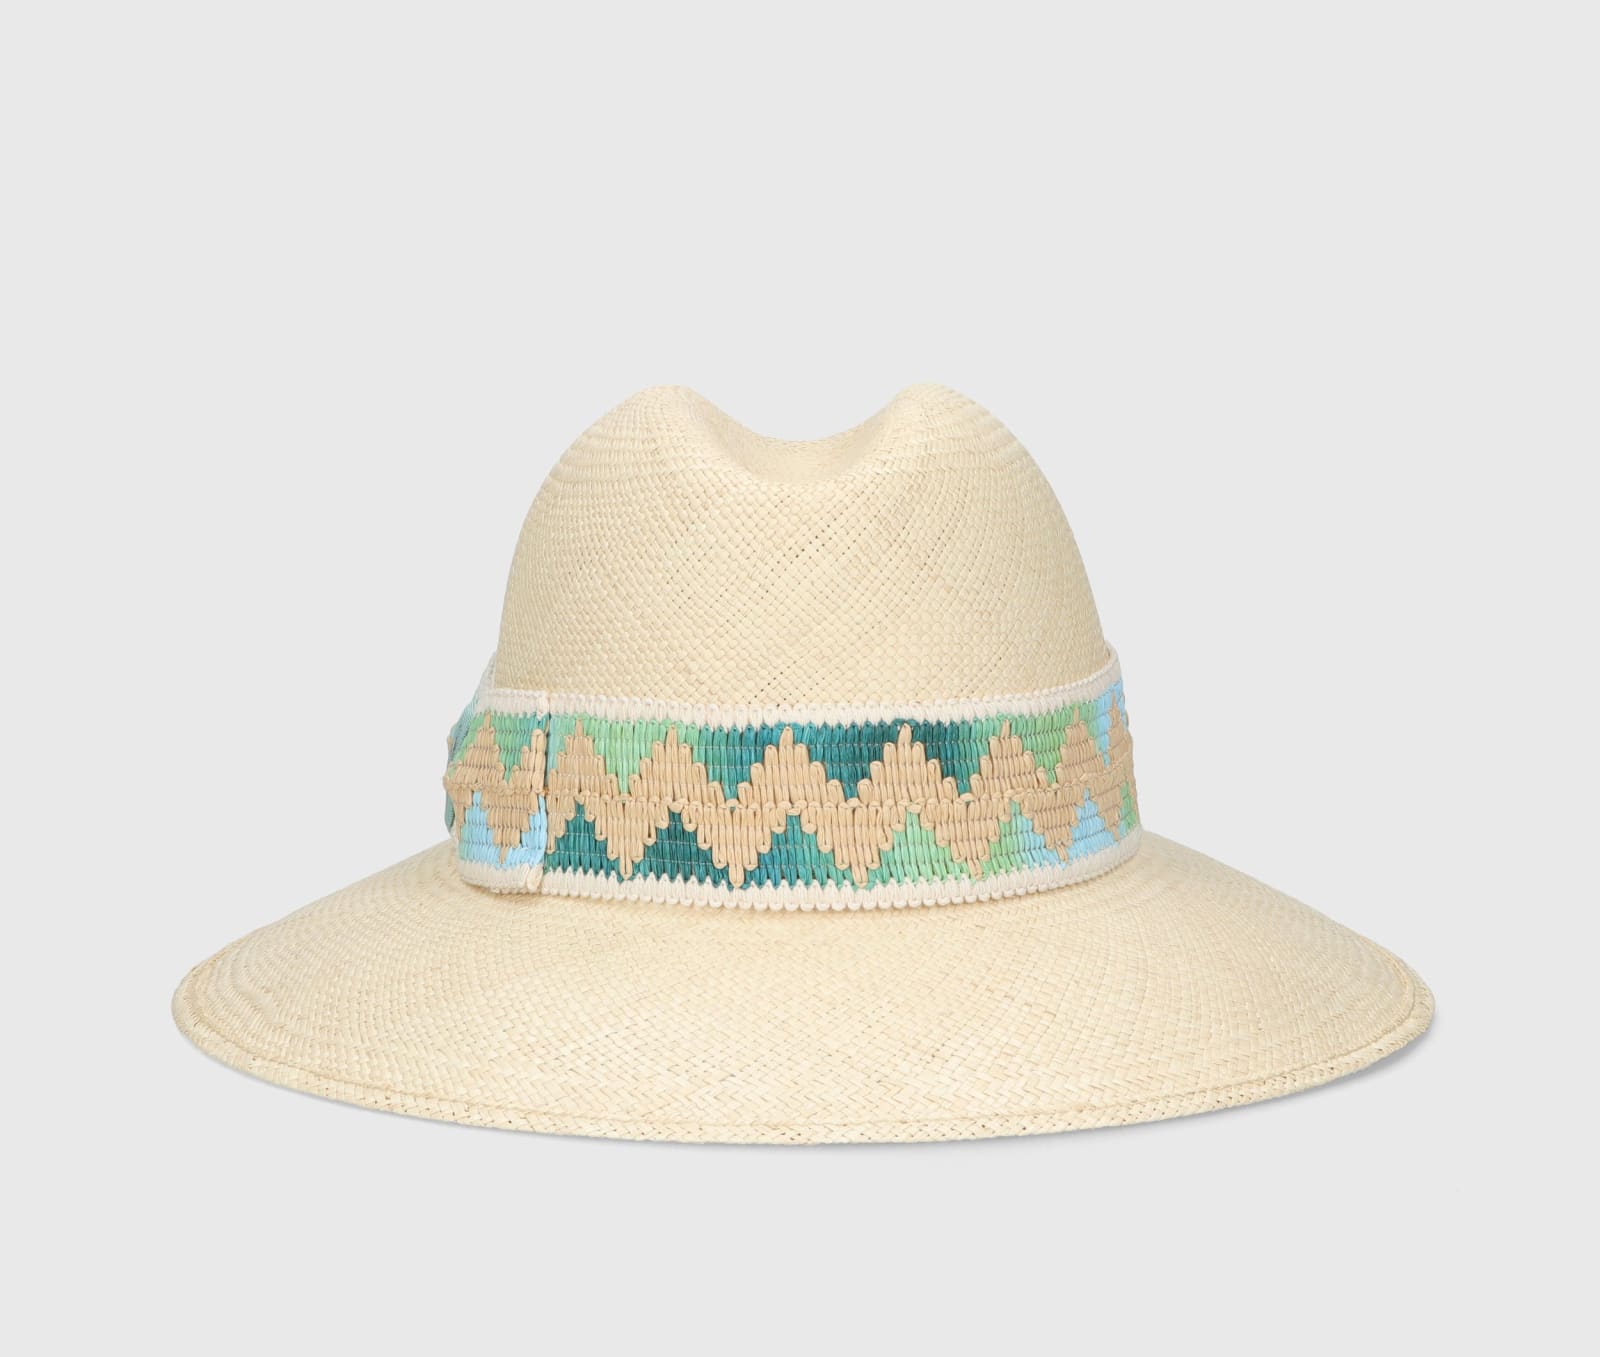 Shop Borsalino Claudette Panama Quito Patterned Hatband In Natural, Patterned Aqua Green Hat Band